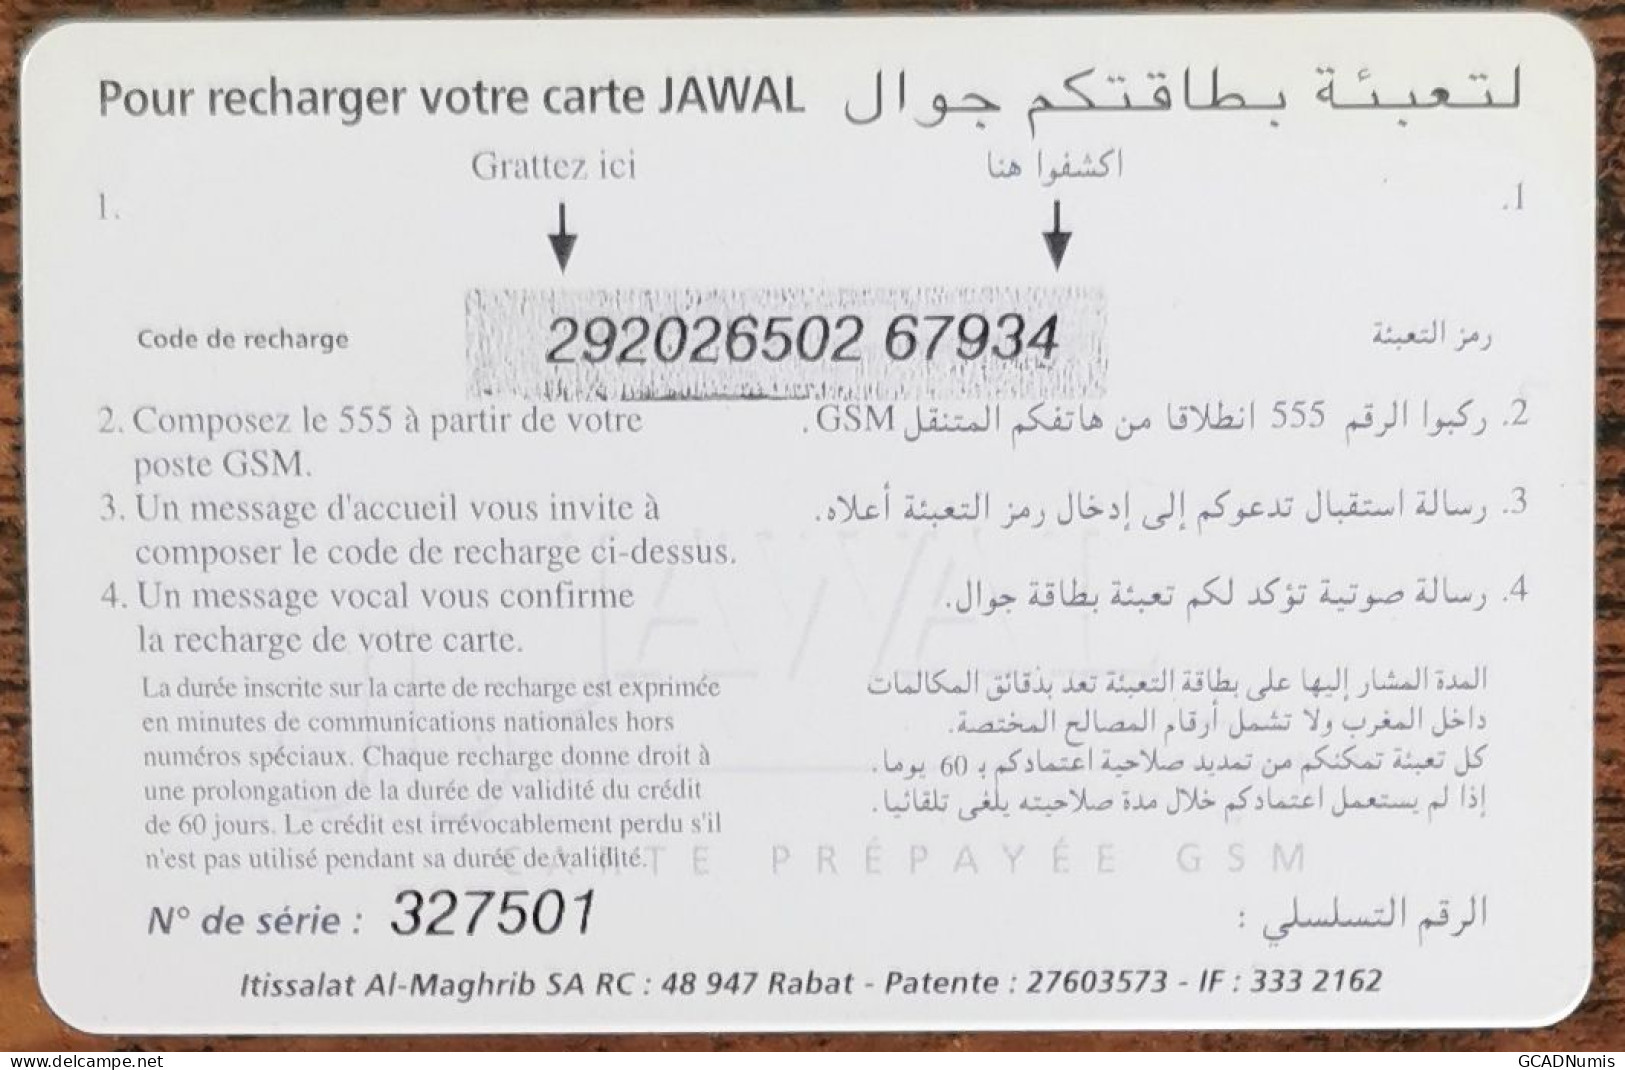 Carte De Recharge - Jawal 30mn Mobile Refill Maroc Telecom - Télécarte ~45 - Maroc